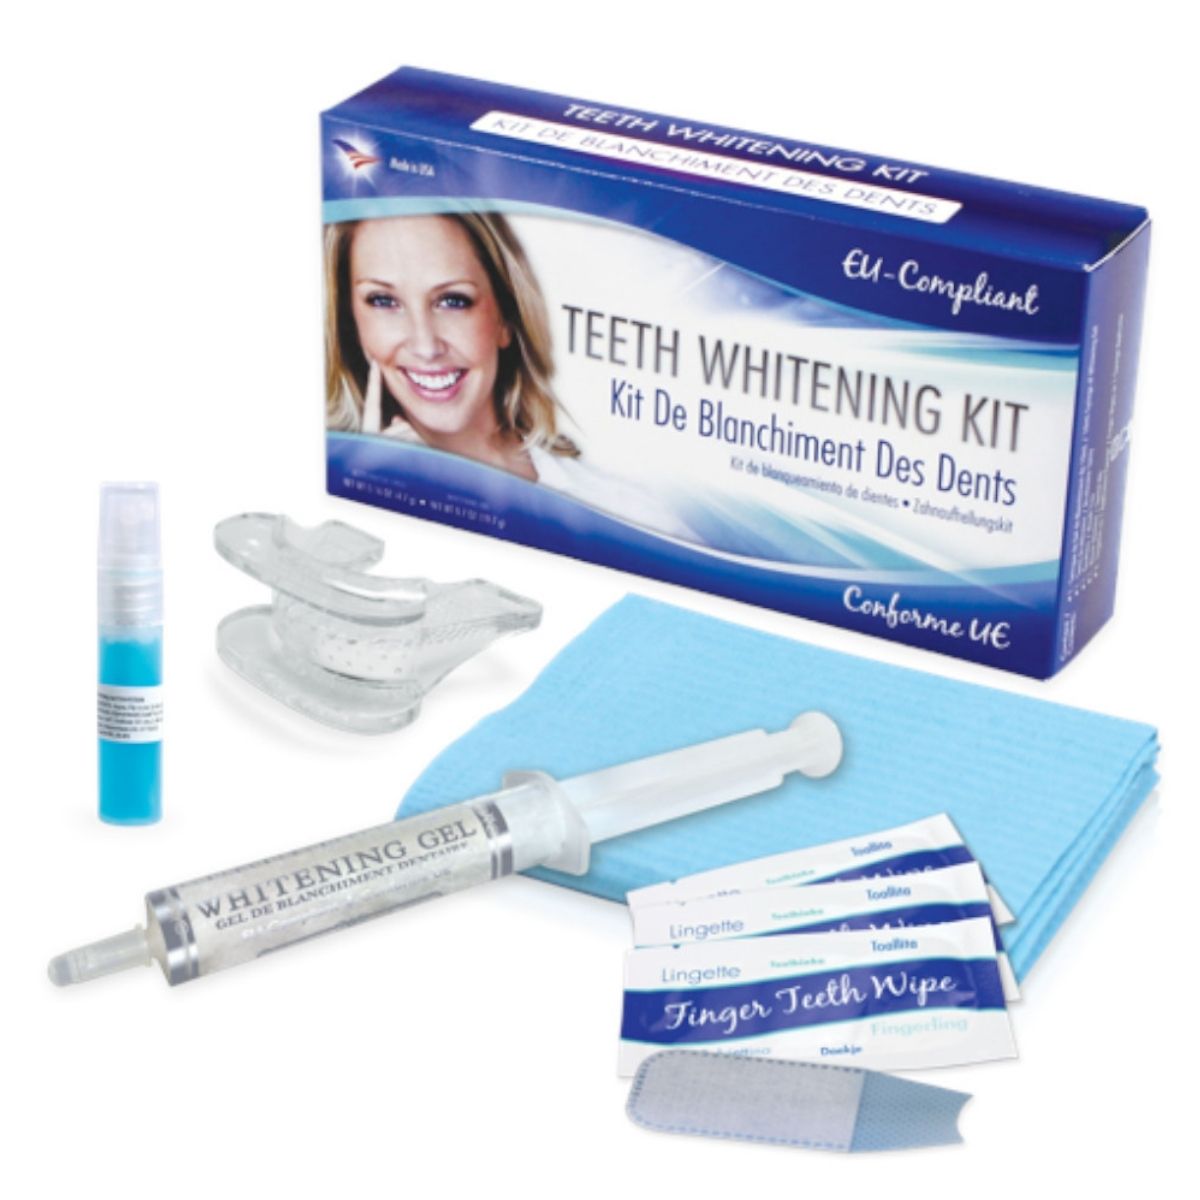 EU Compliant Teeth Whitening Kit